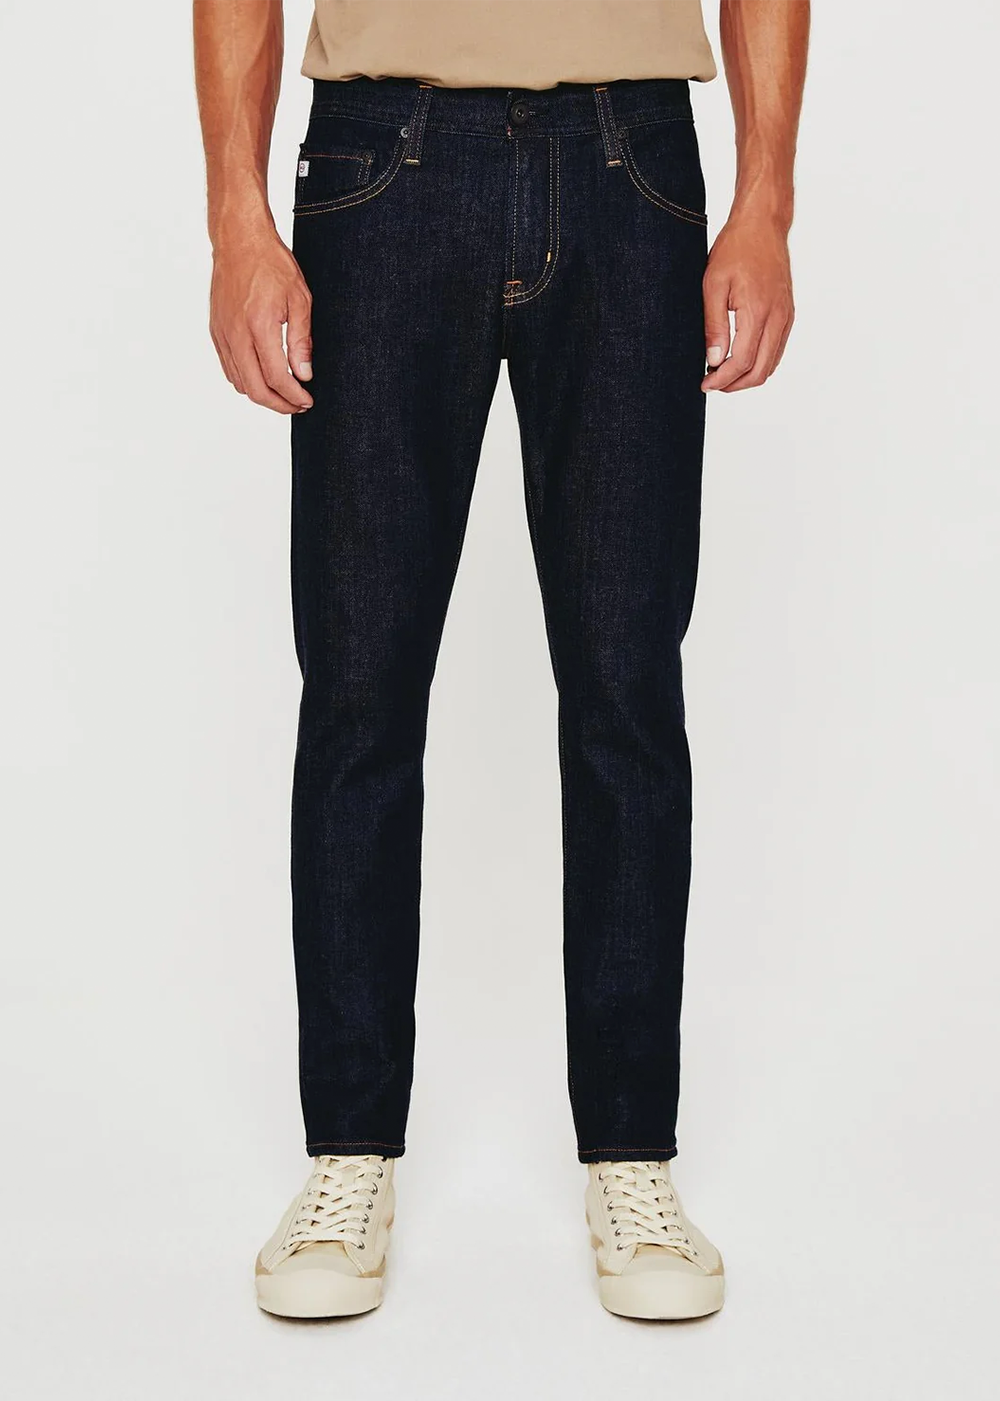 Dylan Slim Skinny Jean - Crucial - AG Jeans Canada - Danali - 1139TSYCUCL